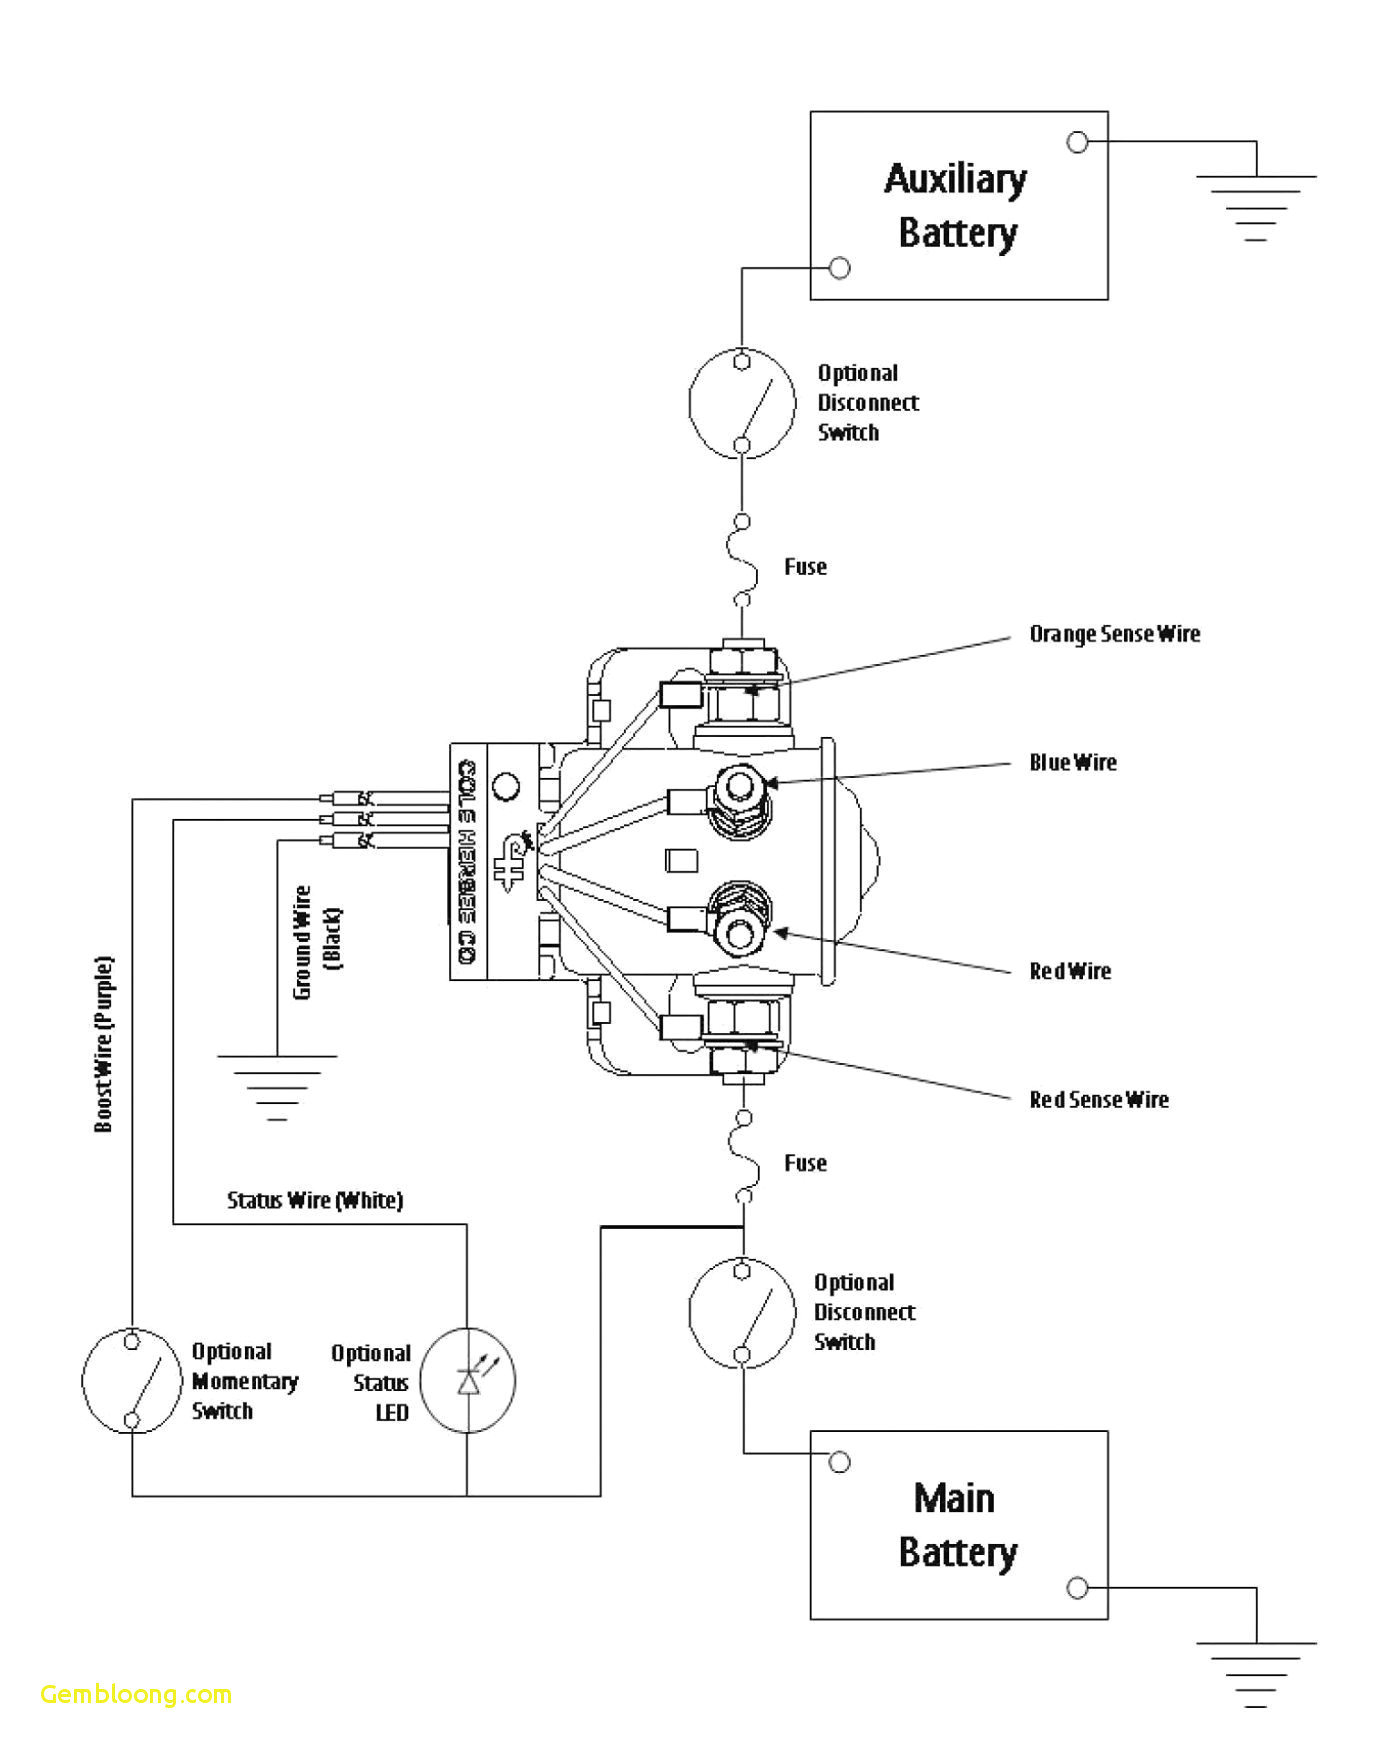 1965 ford alternator wiring wiring diagram files 1965 ford starter solenoid wiring diagram 1965 ford alternator